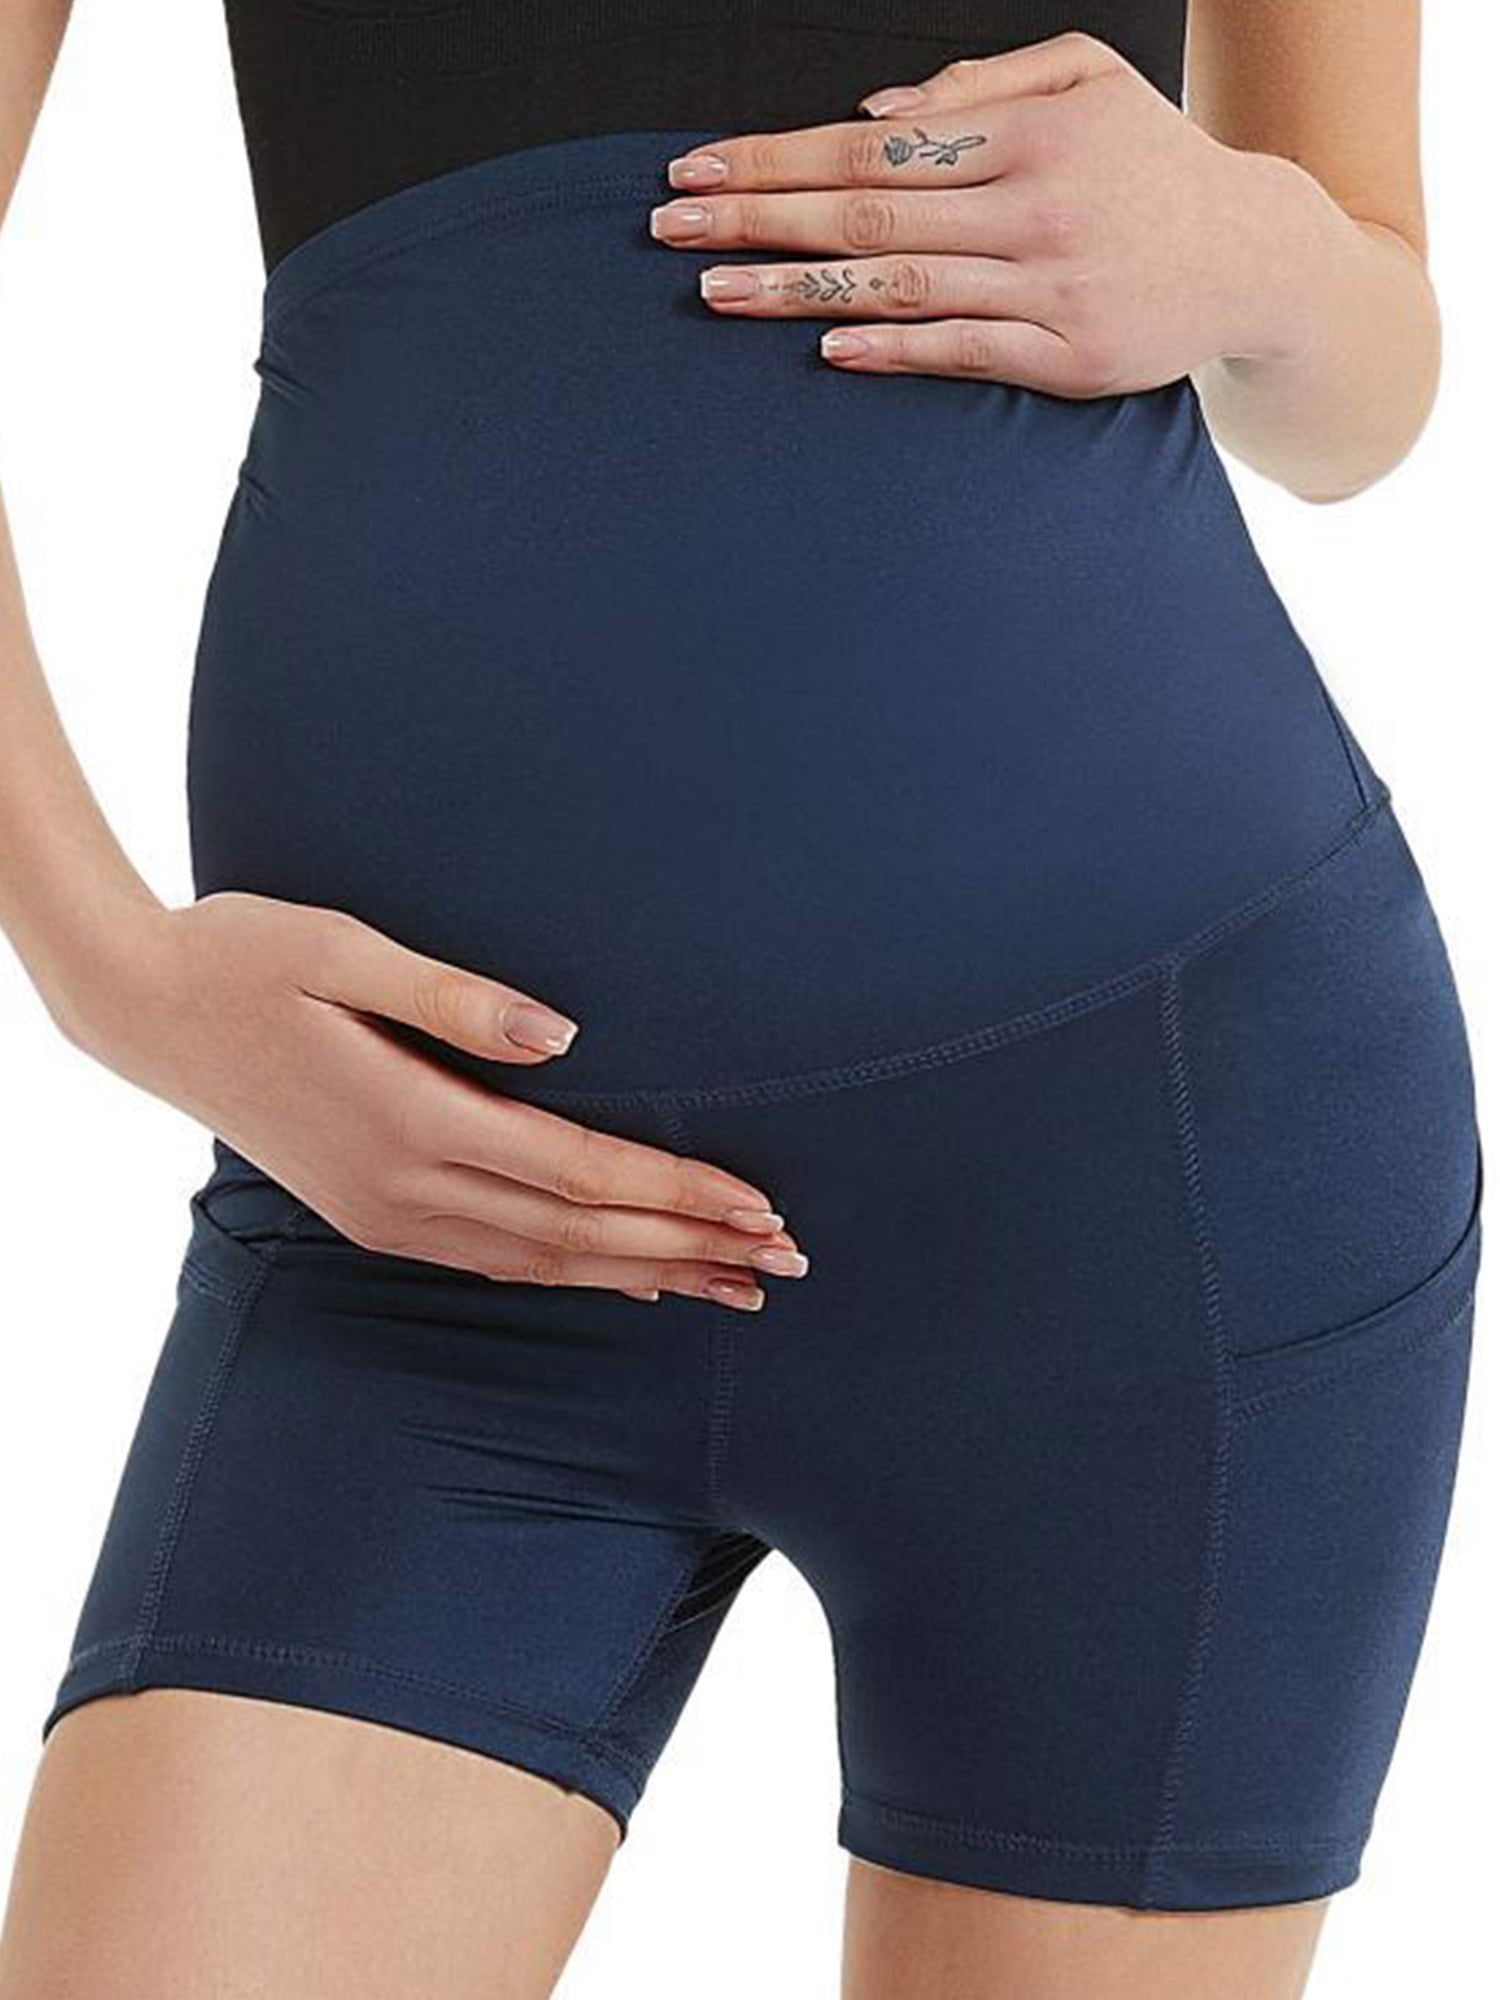 QingWan Women Under Dress Pregnancy Short Leggings Yoga Maternity Shorts Over The Belly 